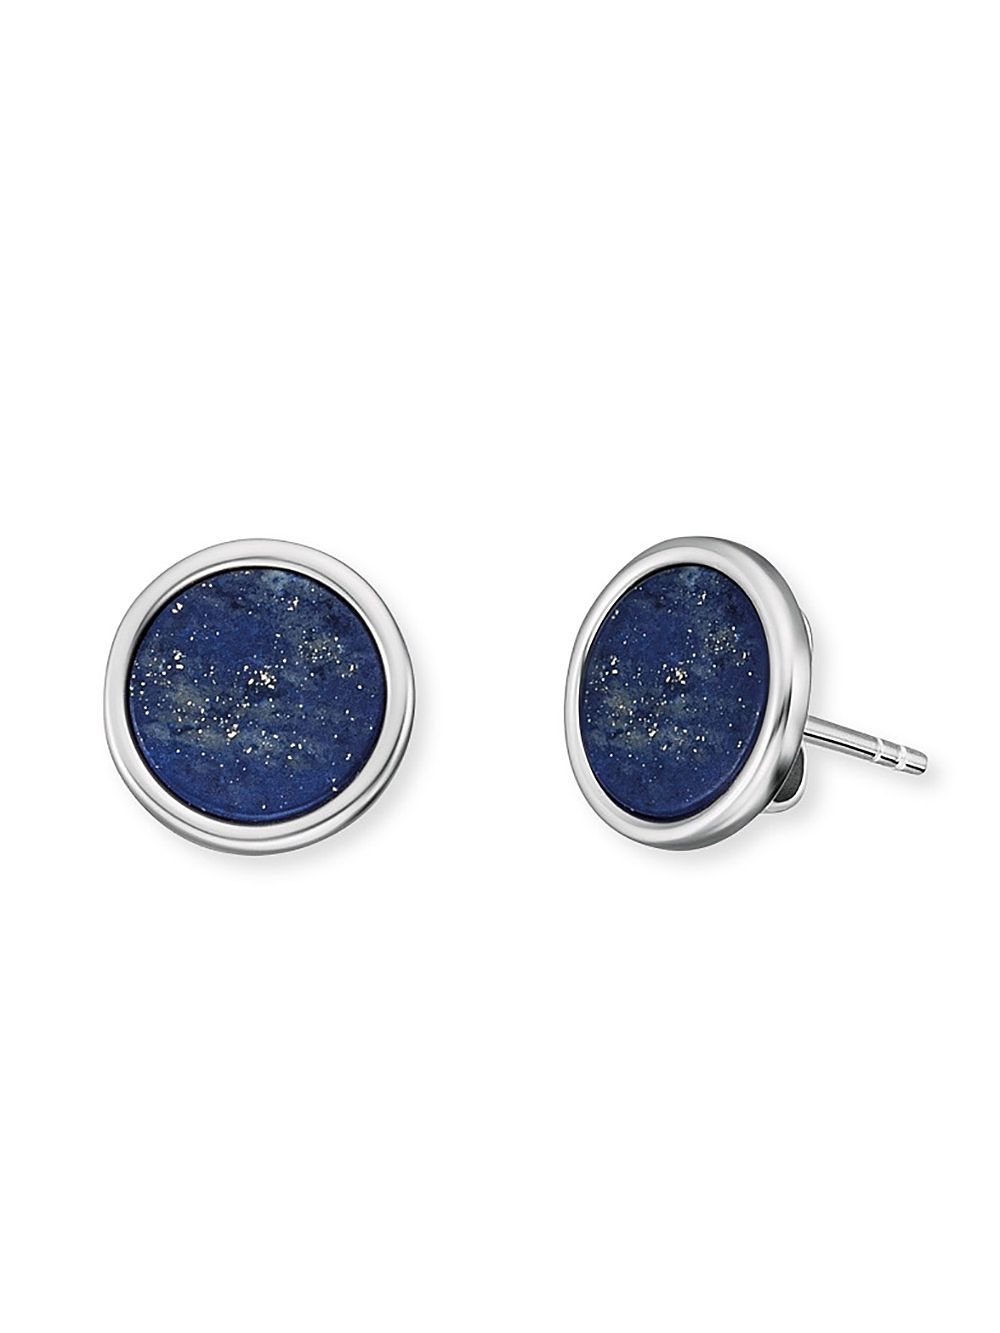 Powerful Lapis Lazuli earrings